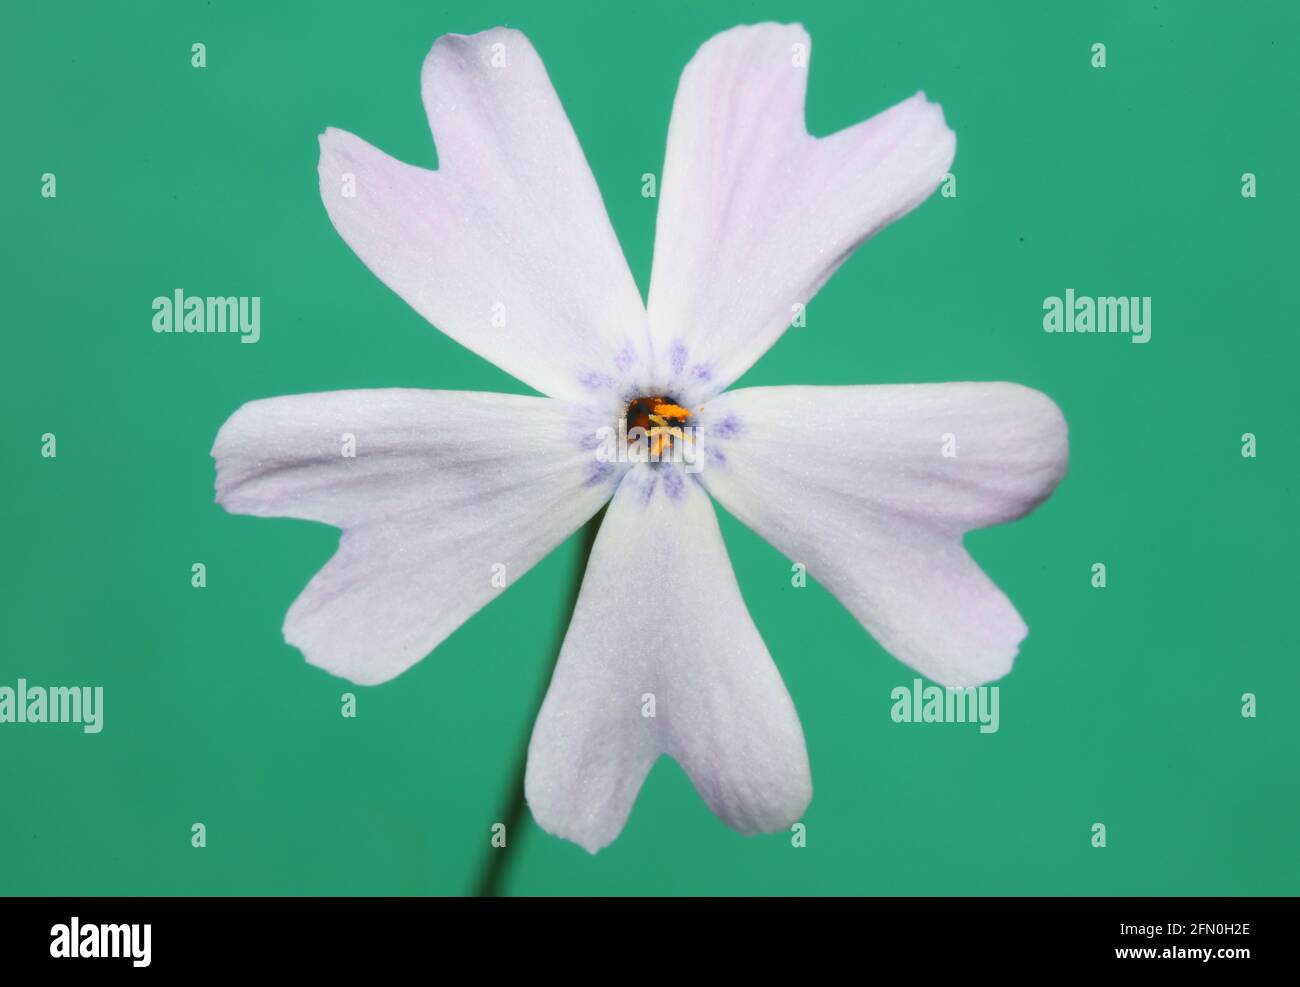 Fiore bianco fioritura primo piano Phlox sabulata L. famiglia polemoniaceae in fondo verde botanica moderna alta qualità grandi dimensioni stampe educative Foto Stock